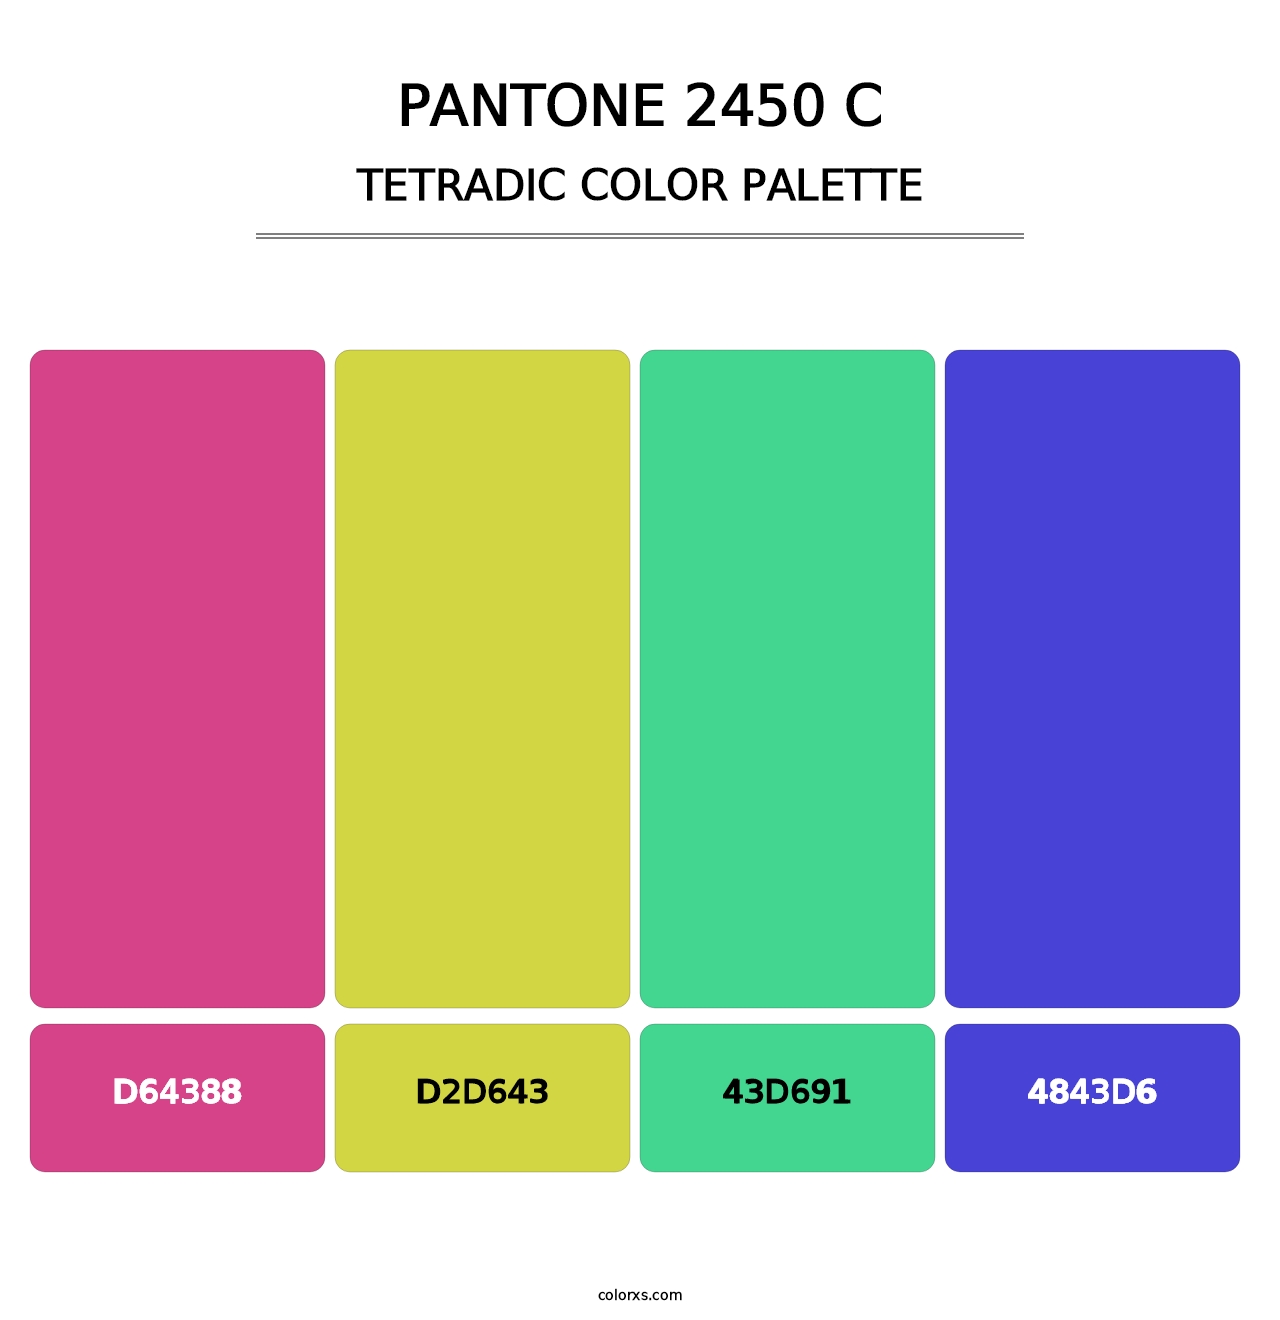 PANTONE 2450 C - Tetradic Color Palette